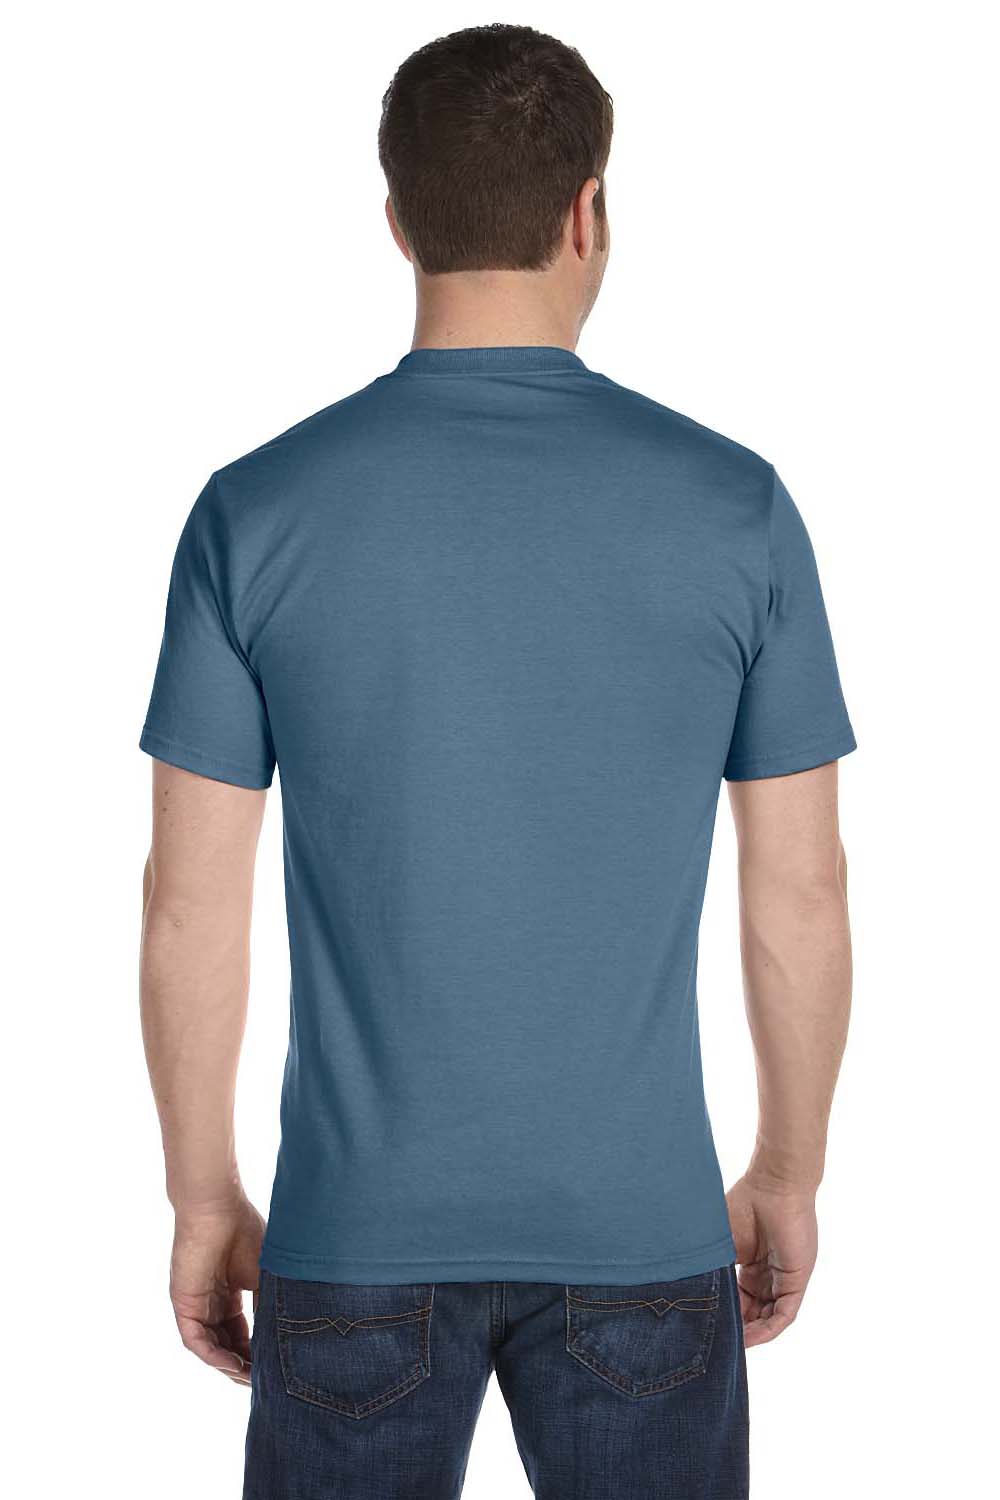 Hanes 5180 Mens Beefy-T Short Sleeve Crewneck T-Shirt Denim Blue Back